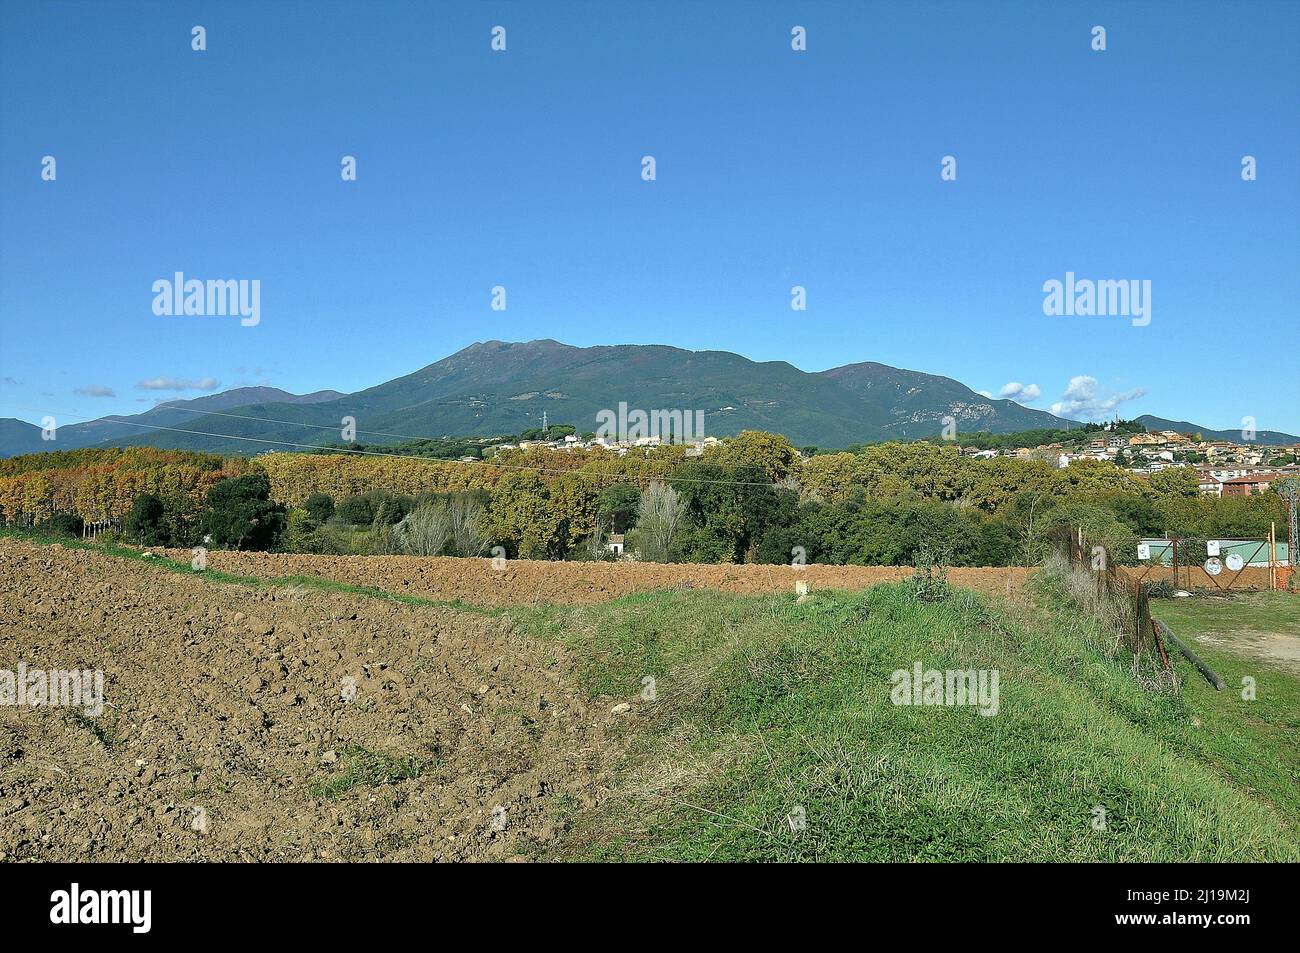 Panoramic view of Montseny from Santa Maria de Palautordera in the Valles Oriental region, province of Barcelona, Catalonia, Spain Stock Photo